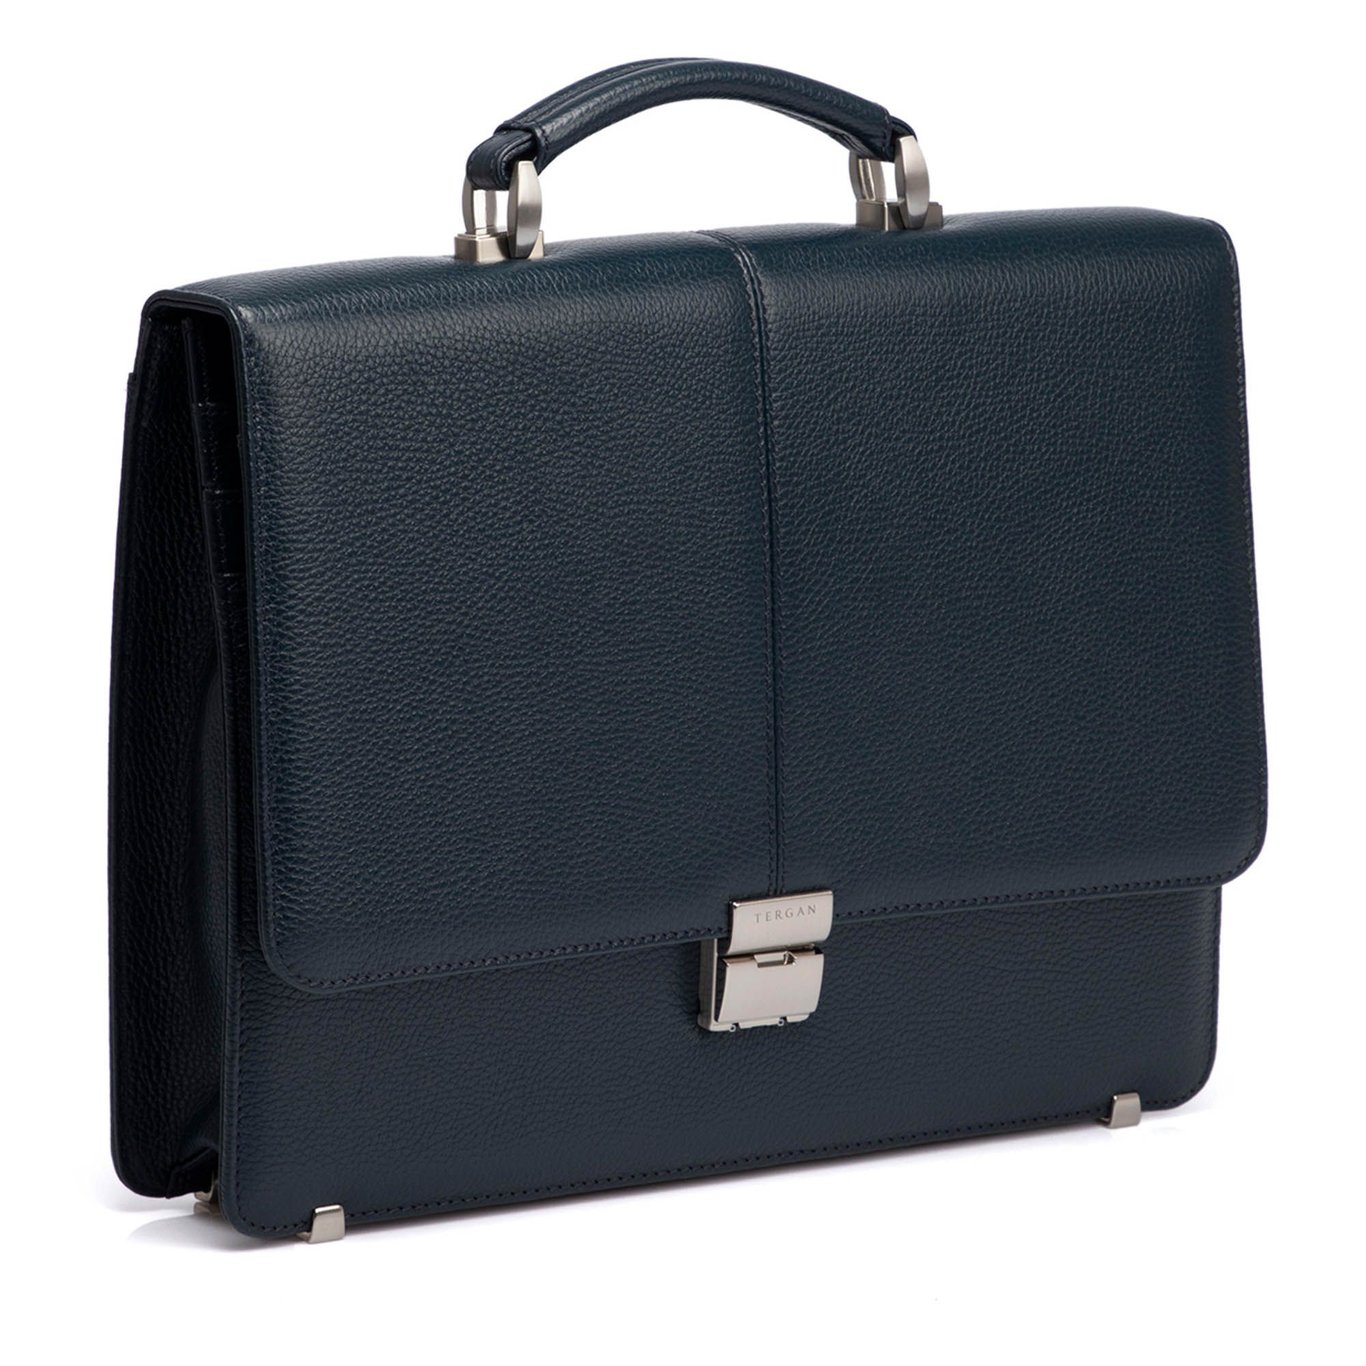 Tergan Leather Briefcase